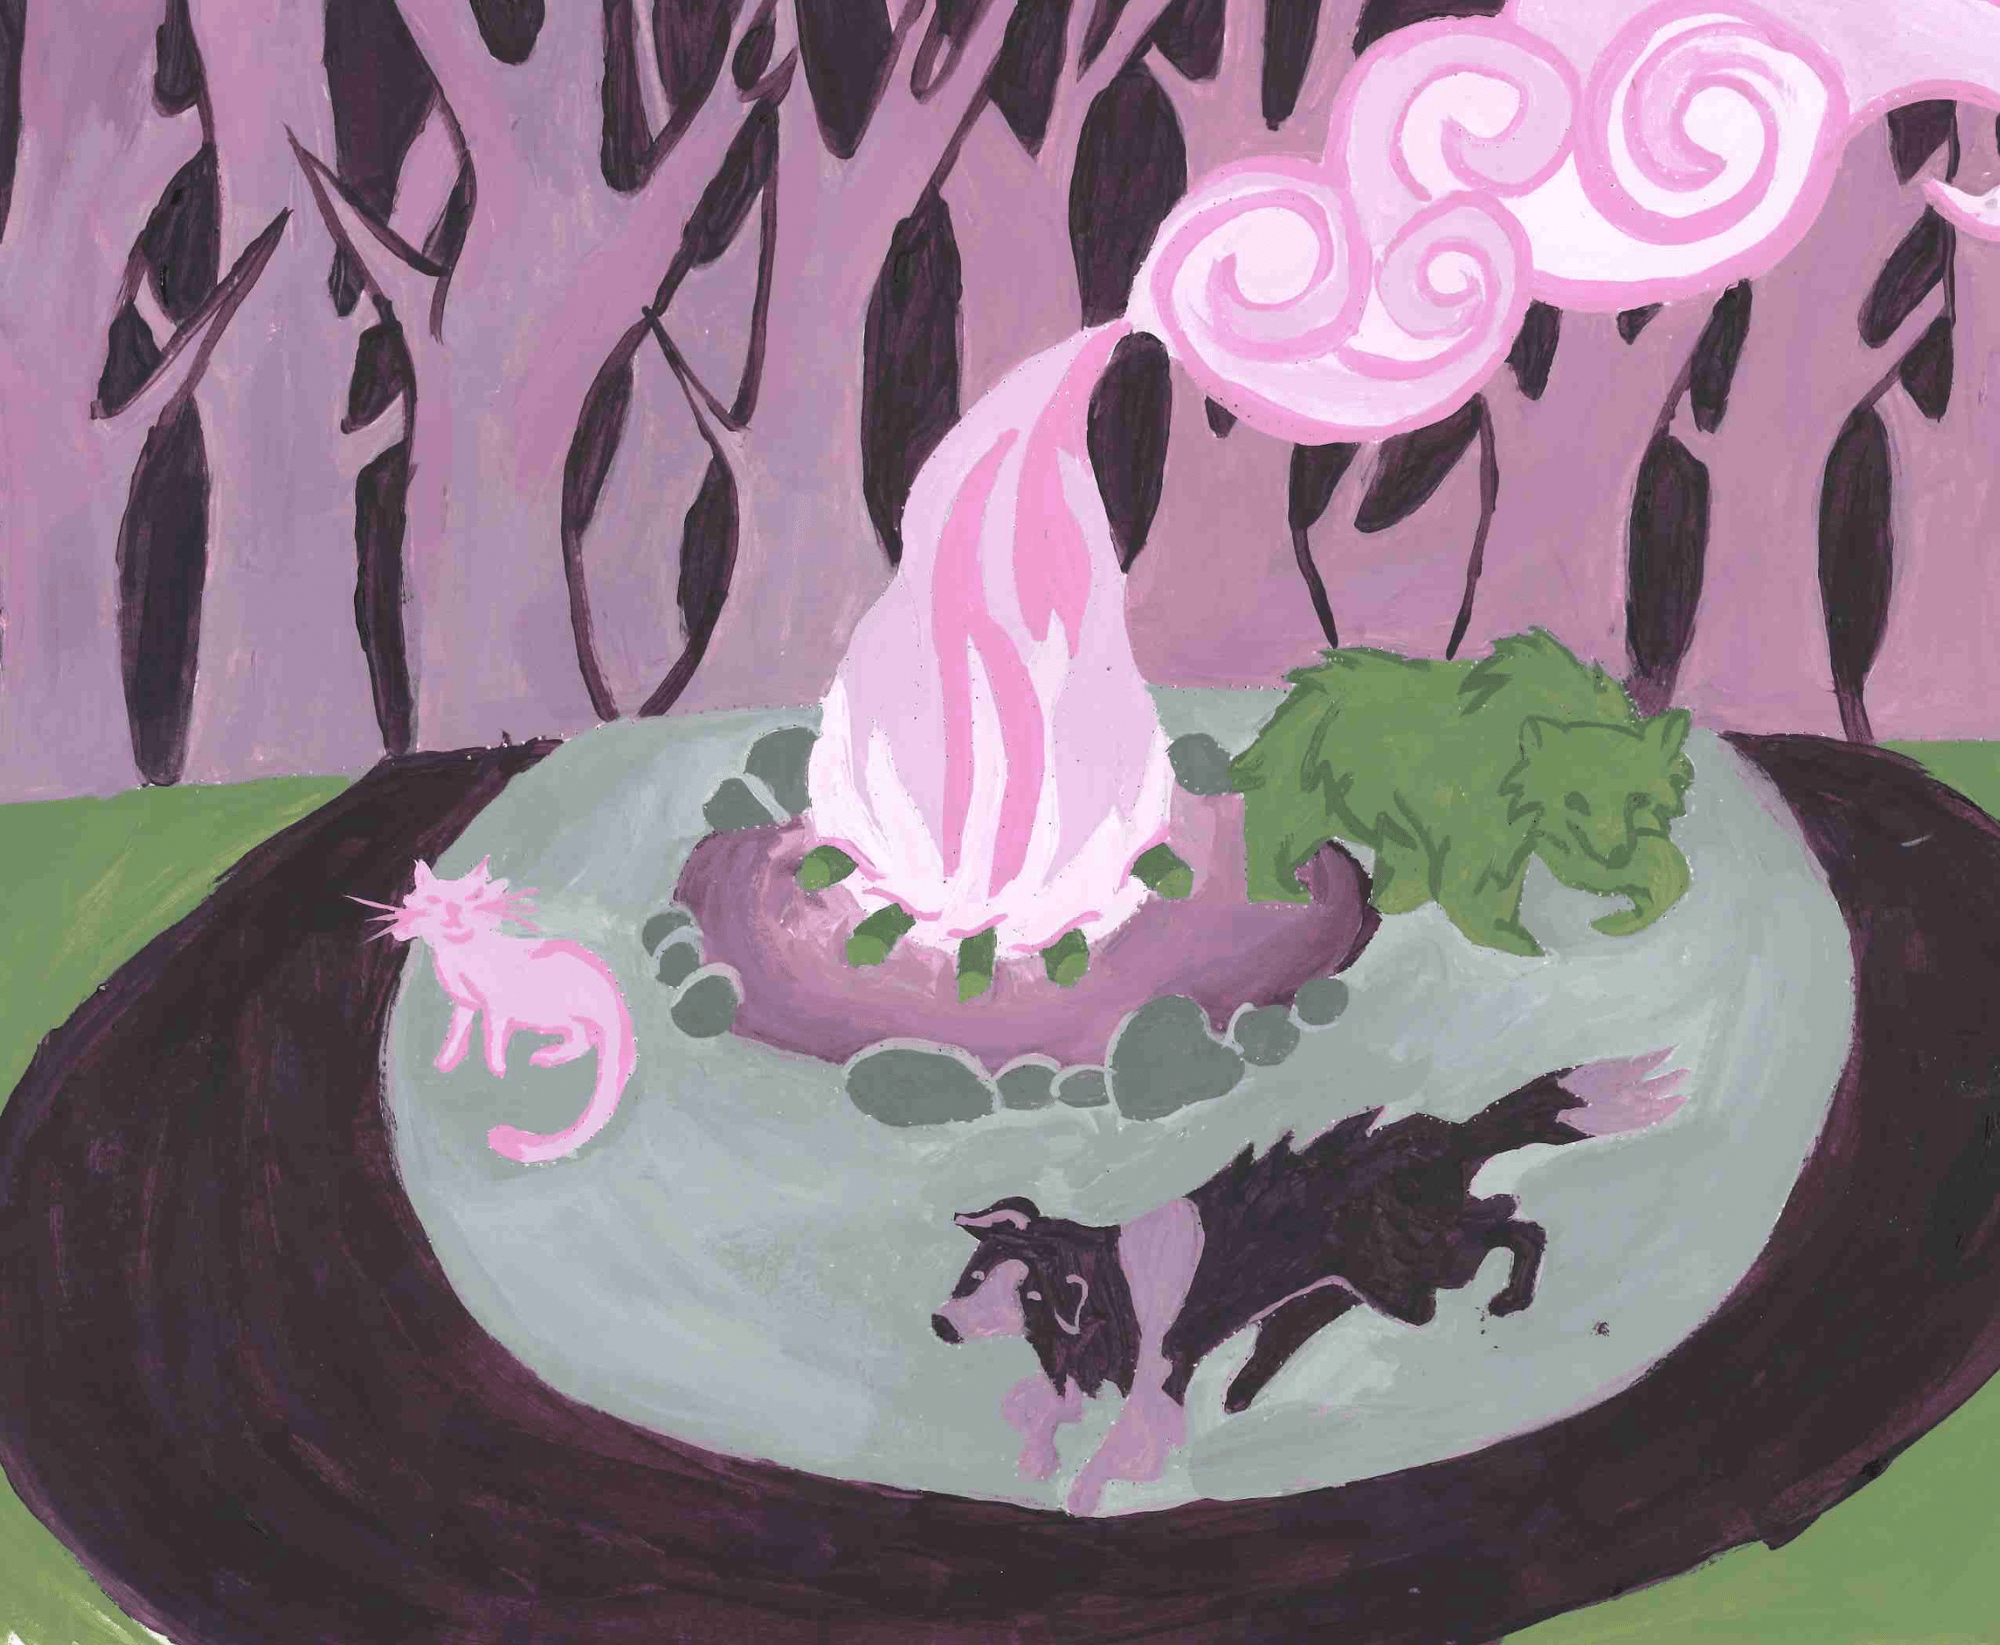 Painting of three animals (bear, cat, dog) walking around a campfire